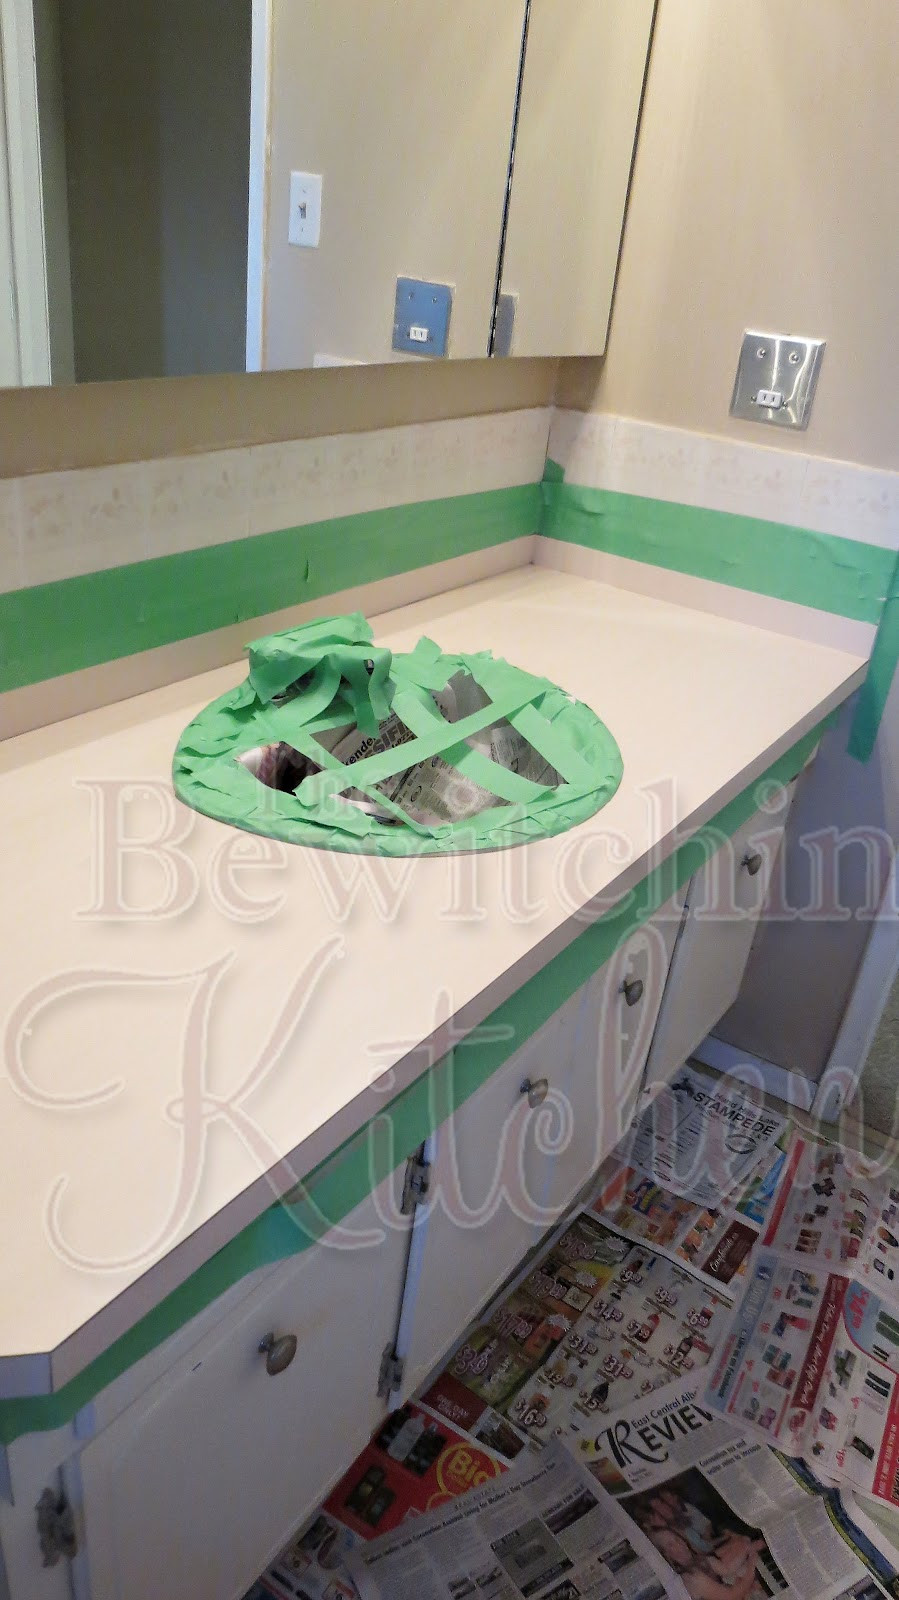 Best ideas about DIY Bathroom Countertop
. Save or Pin DIY Bathroom Countertops For $25 Now.